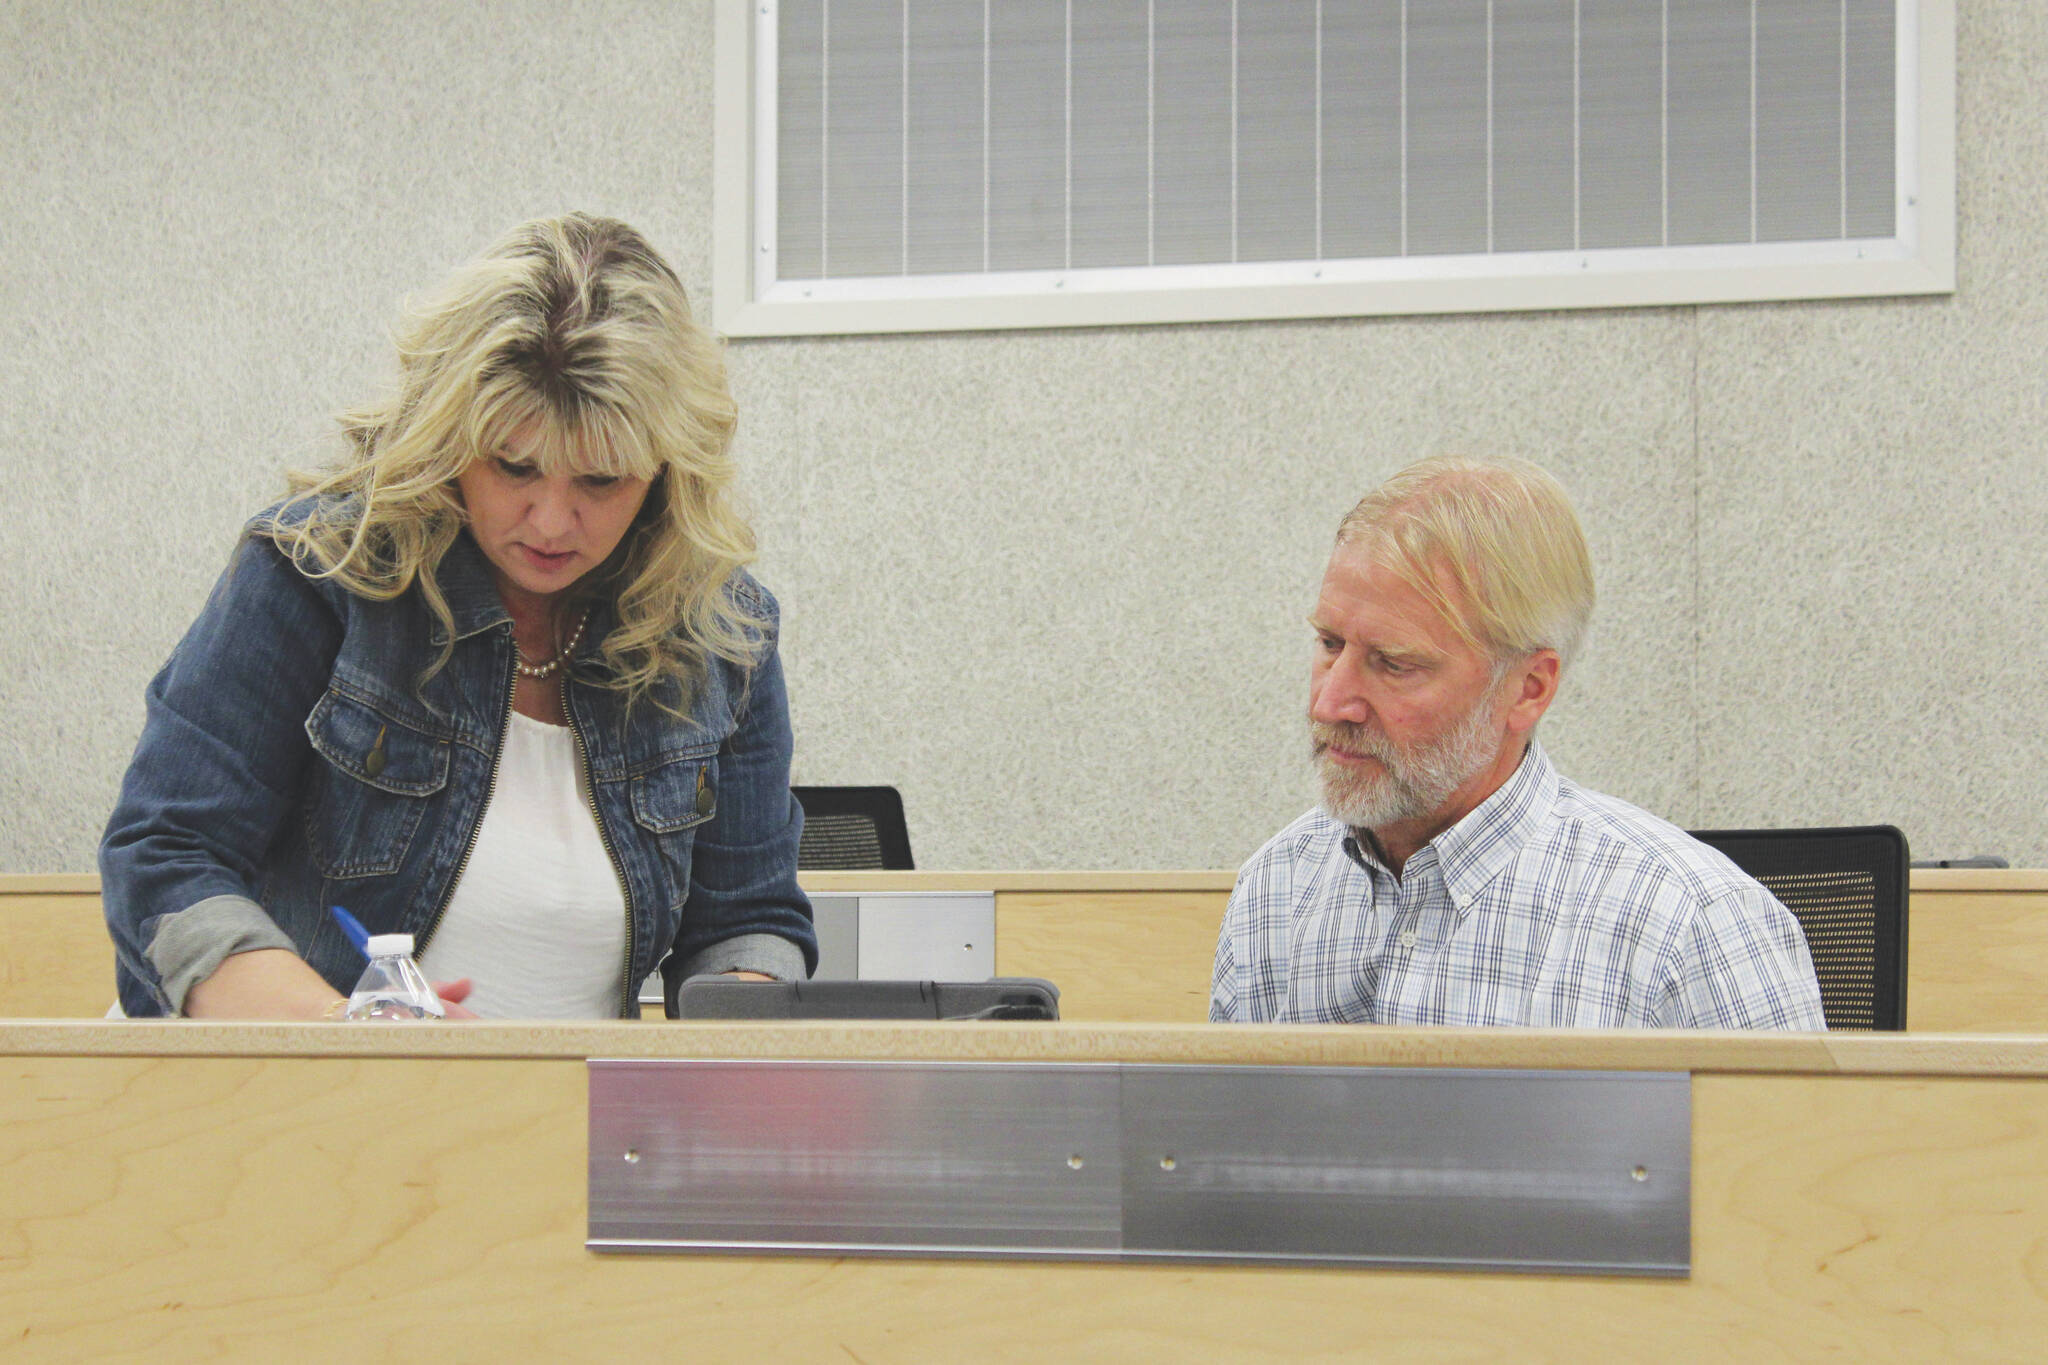 Acting Kenai Peninsula Borough Clerk Michele Turner helps newly sworn-in assembly member Peter Ribbens set up assembly materials on Tuesday, Jan. 17, 2023, in Soldotna, Alaska. (Ashlyn O'Hara/Peninsula Clarion)